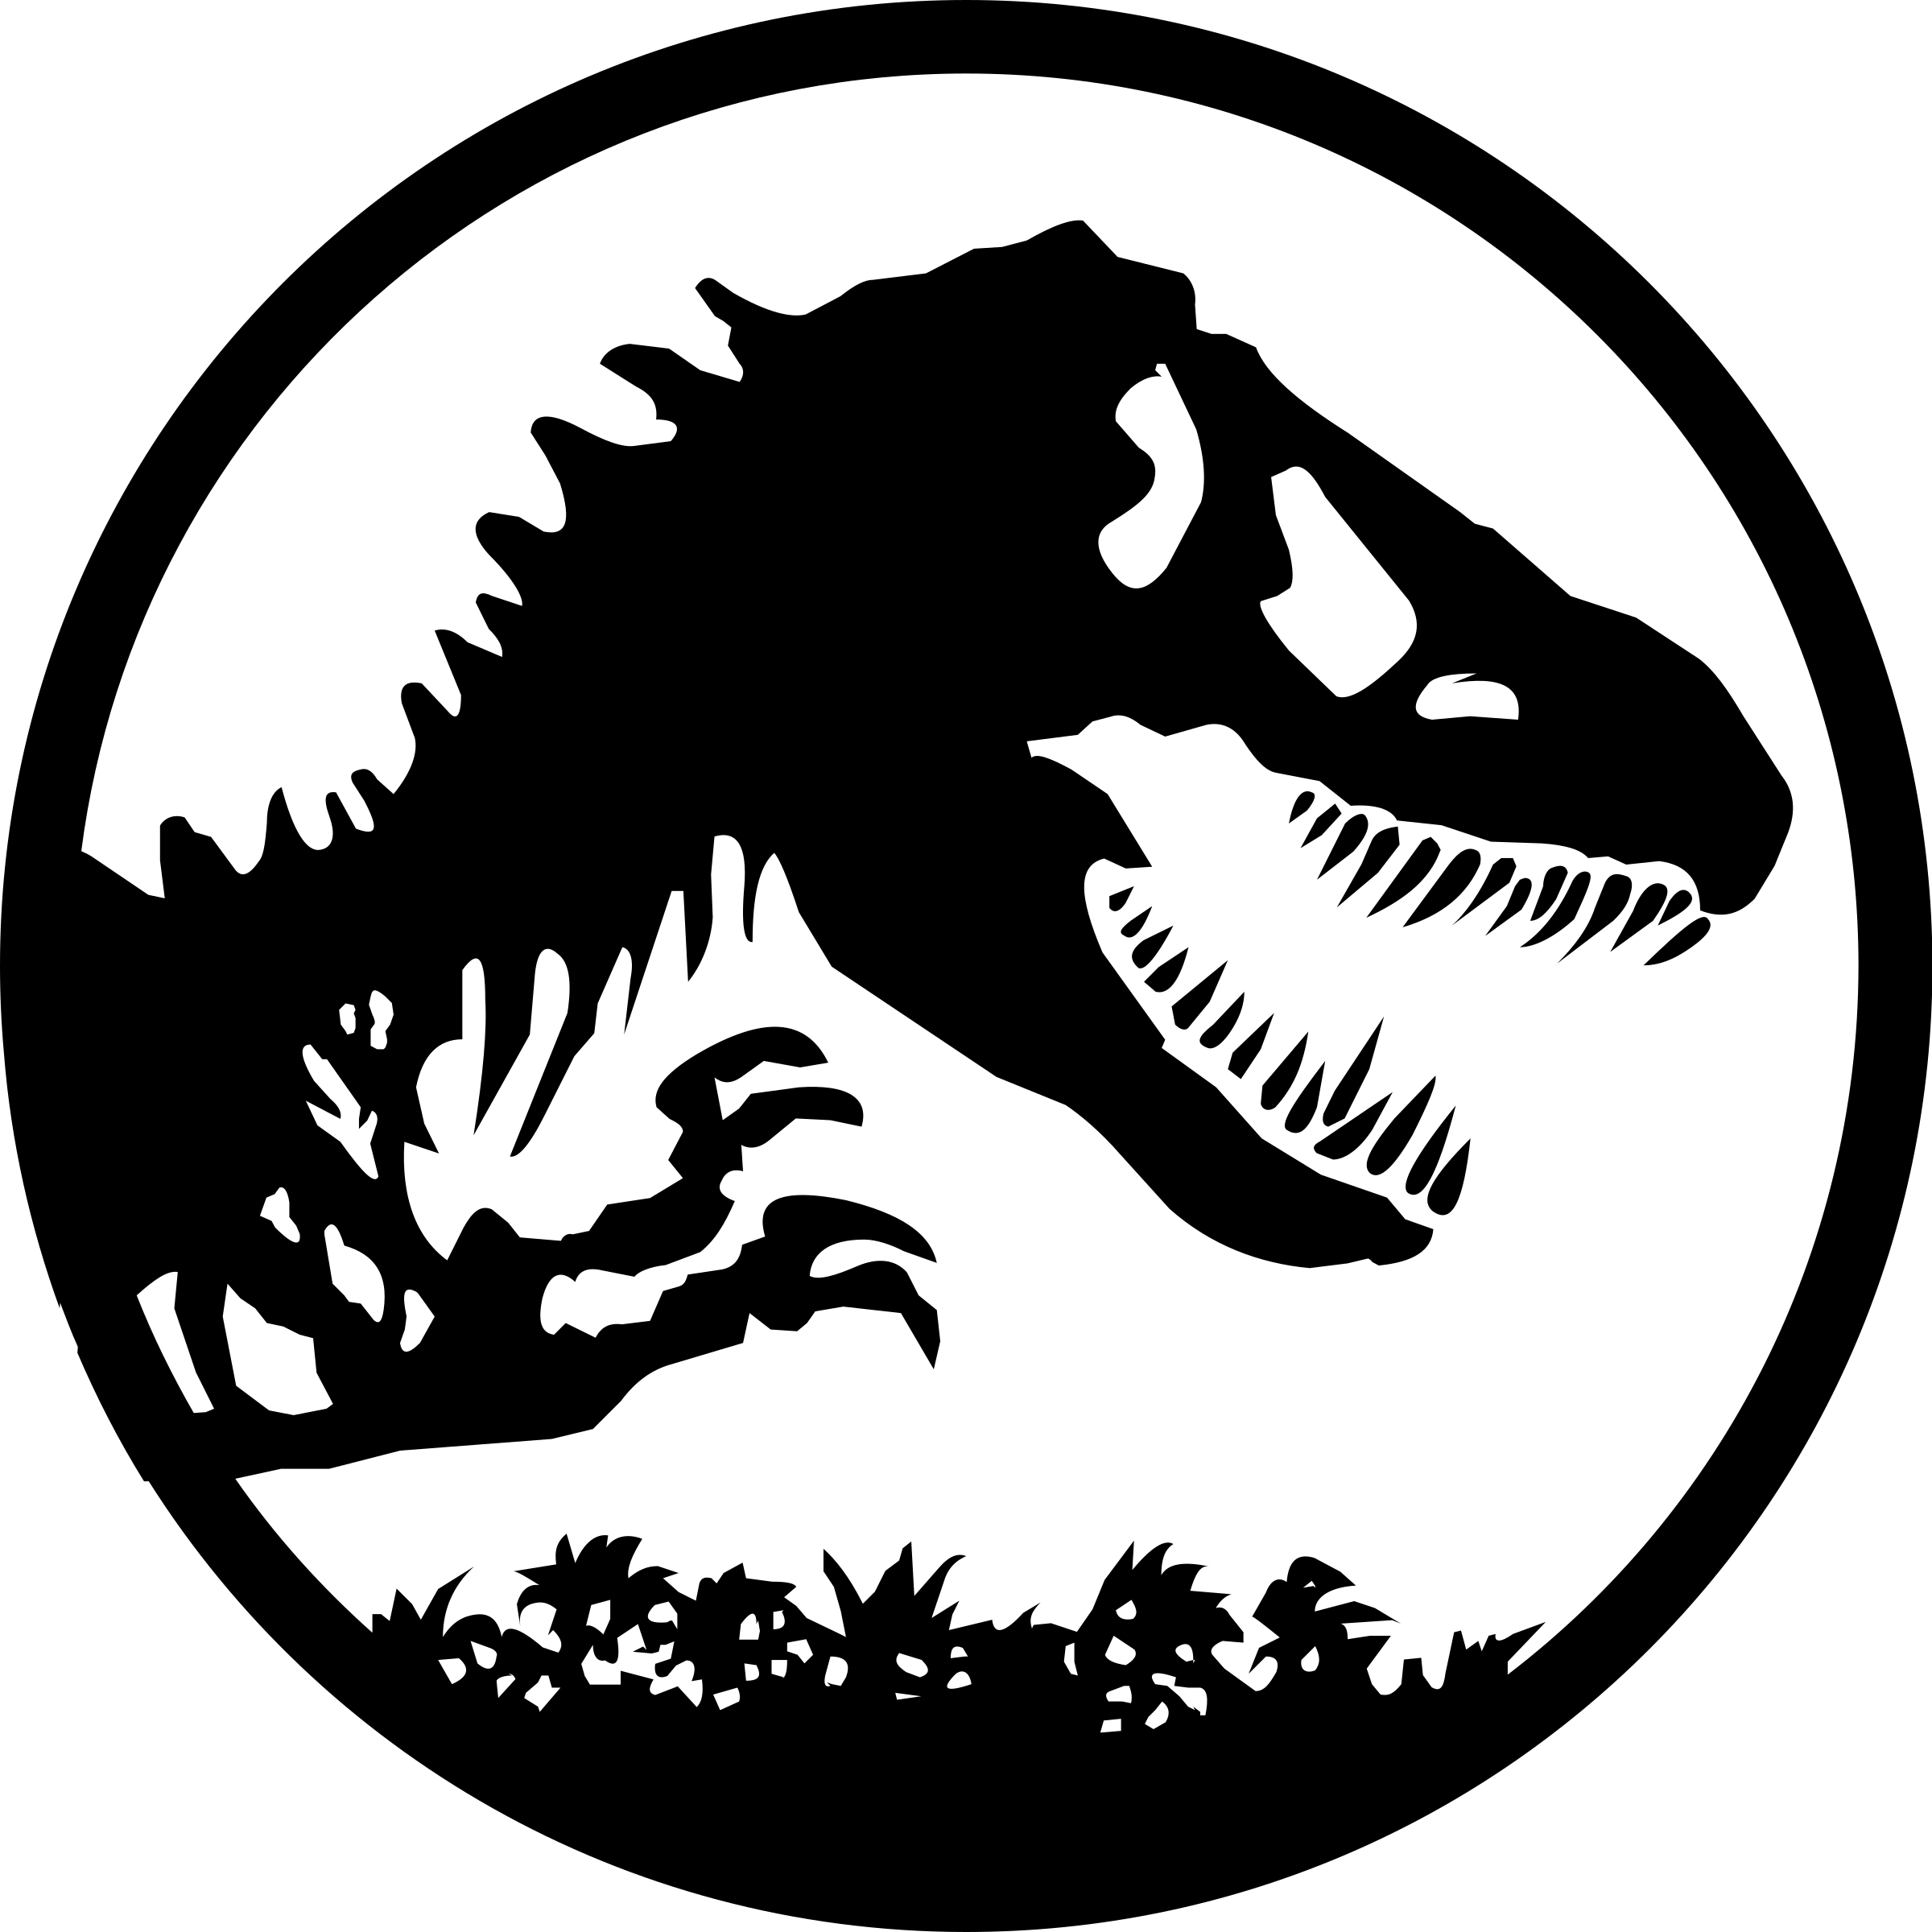 Jurassic Logo - Jurassic World Logo PNG Transparent & SVG Vector - Freebie Supply